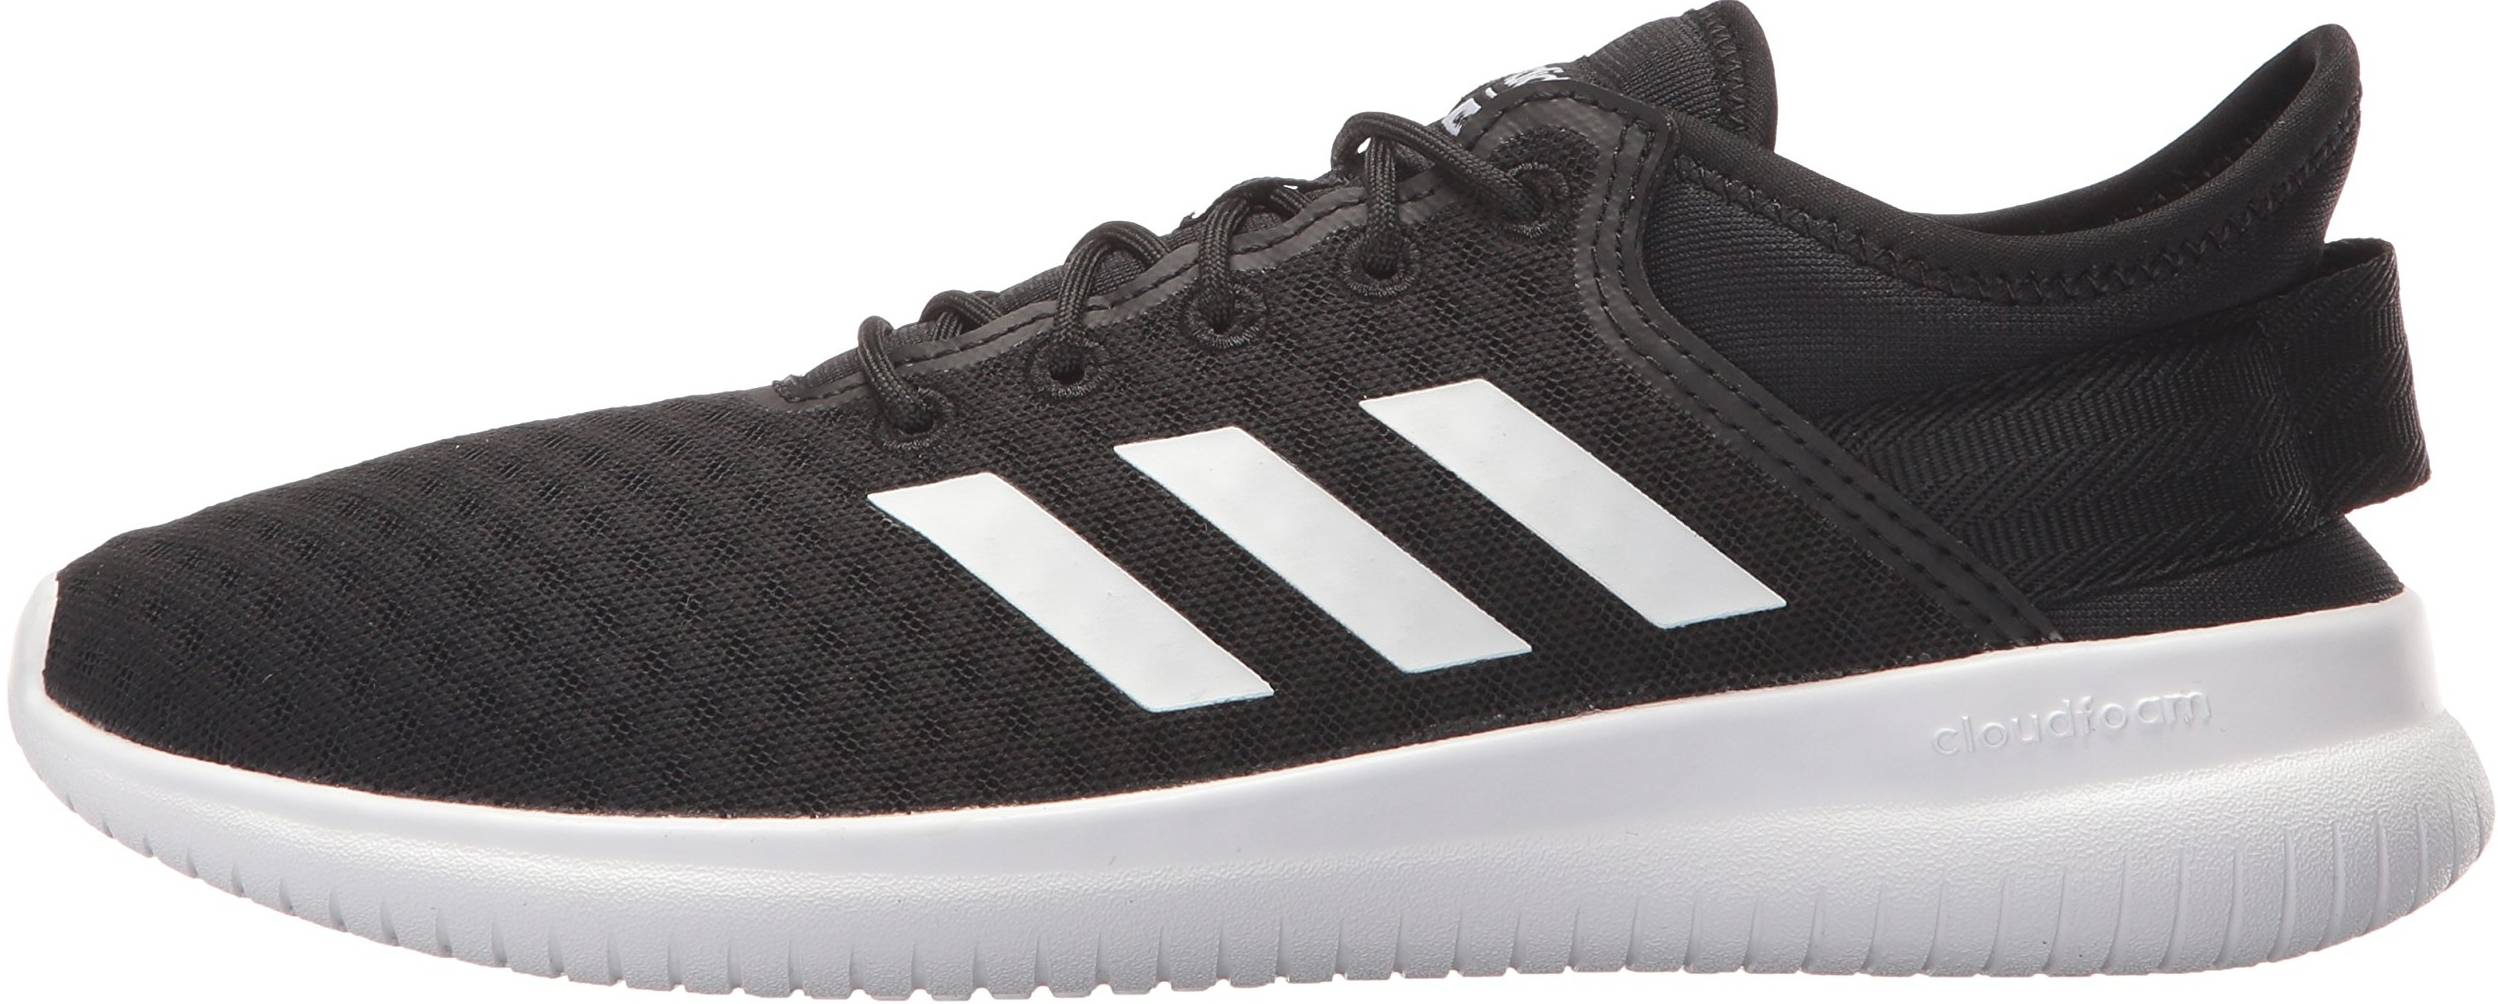 Adidas Cloudfoam QT Flex sneakers in grey black (only £45) | RunRepeat